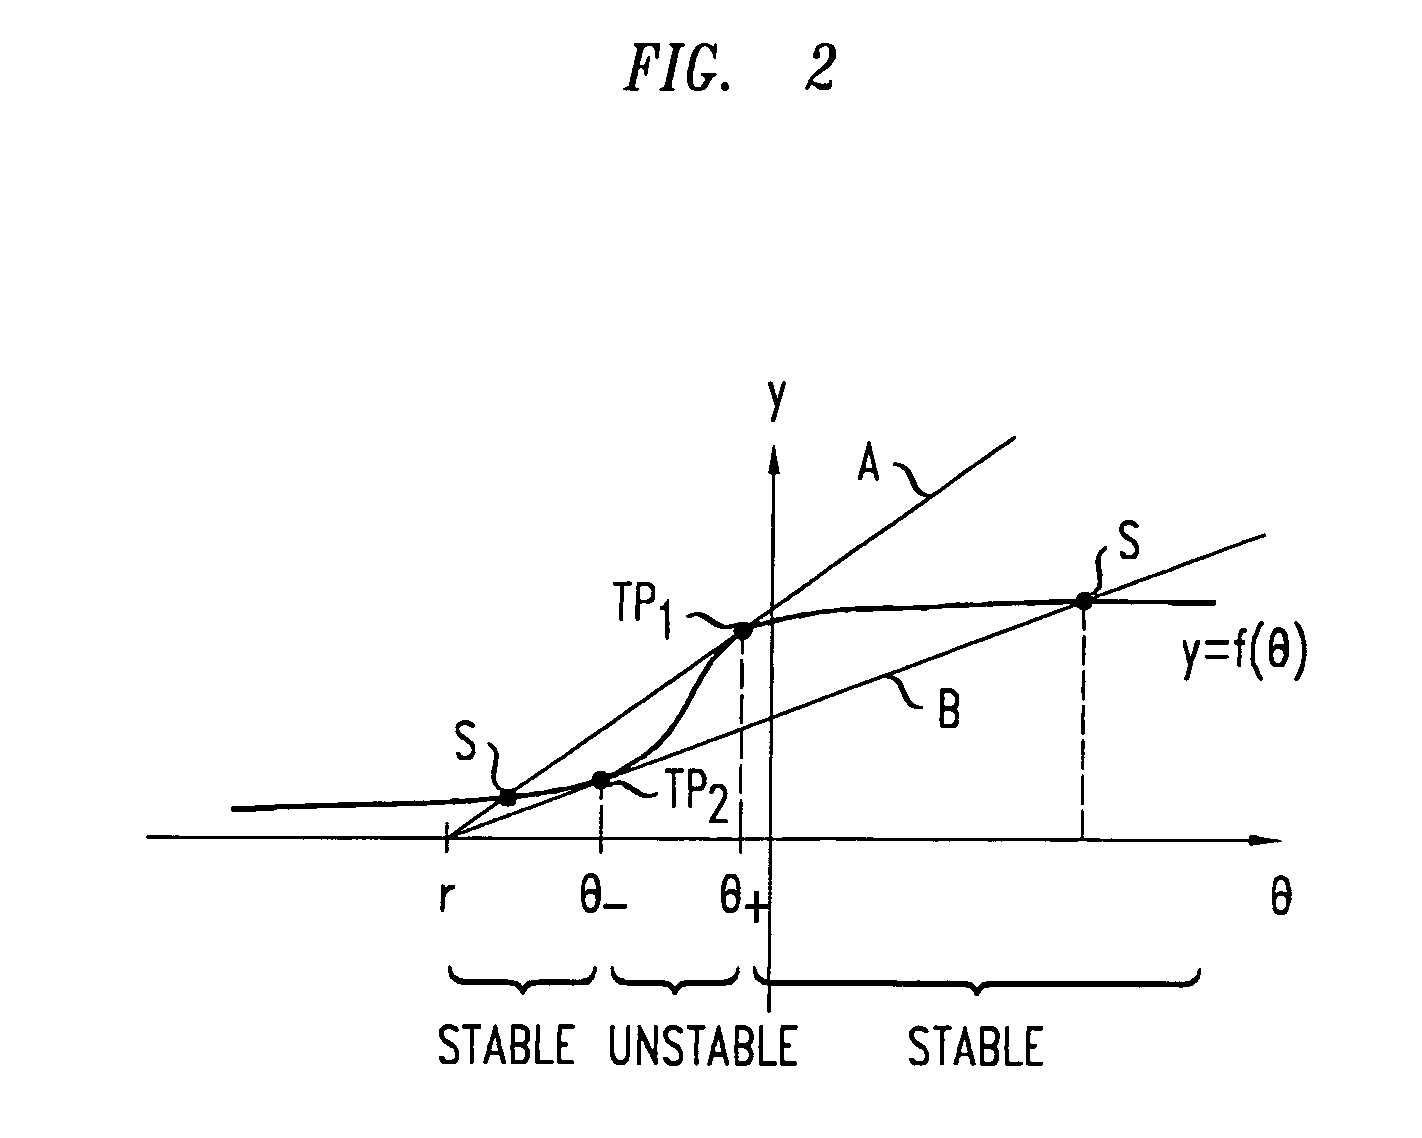 Stable electro-mechanical actuators